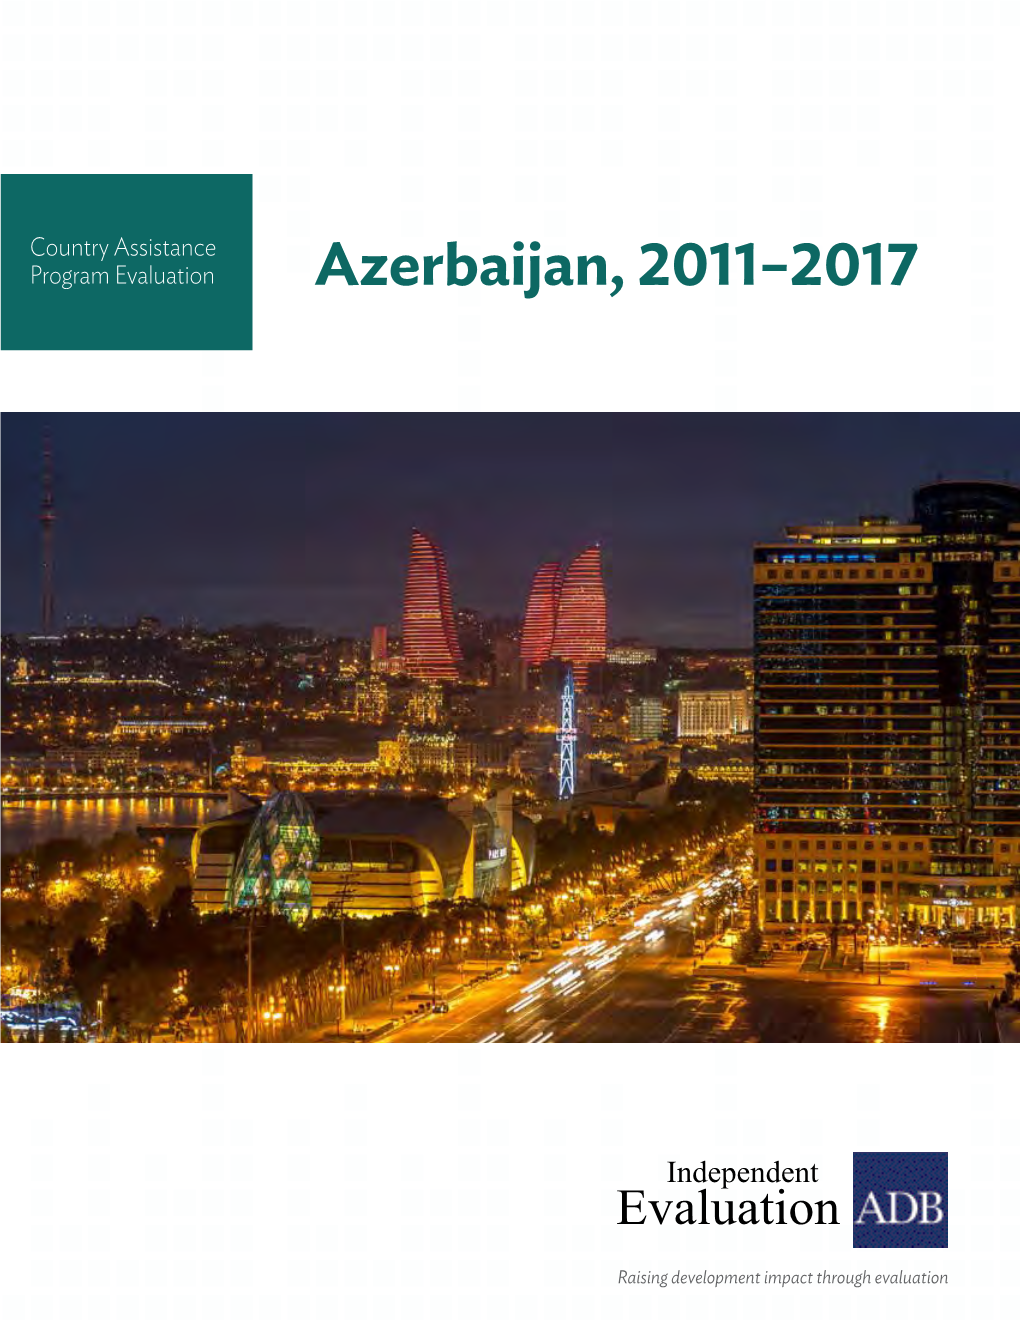 Country Assistance Program Evaluation: Azerbaijan, 2011–2017